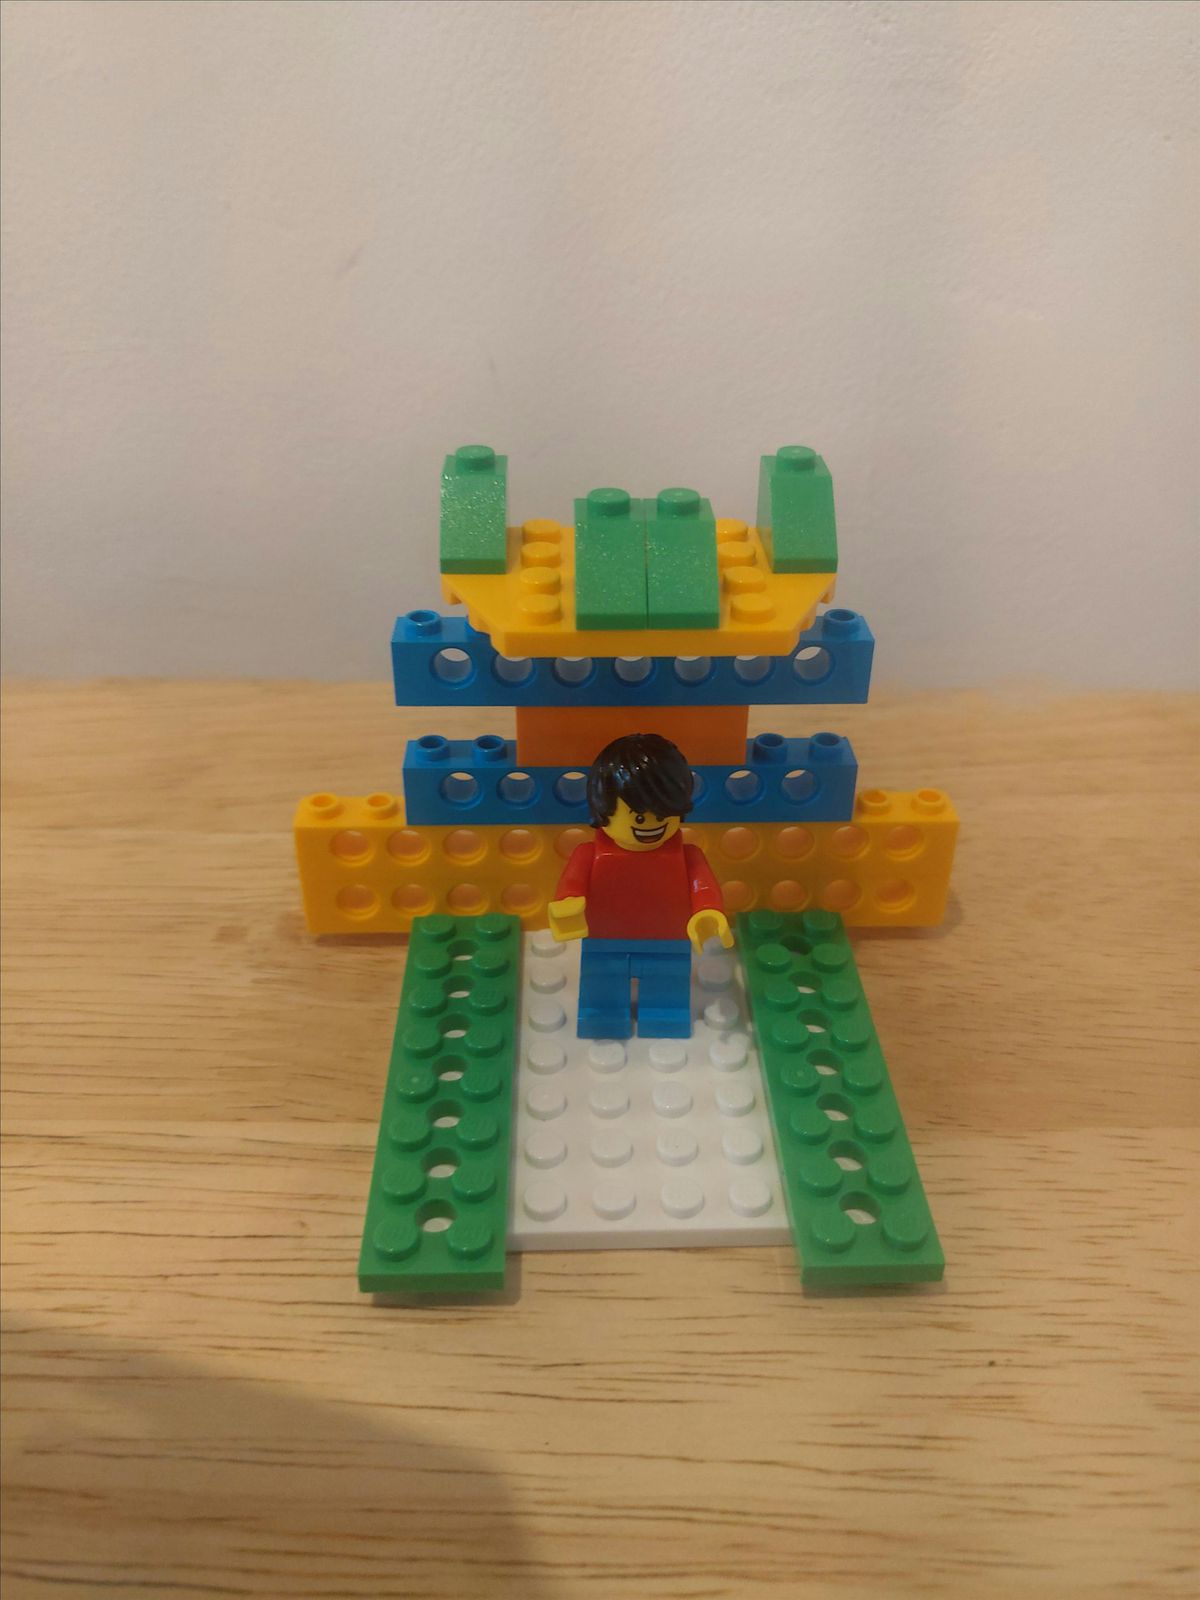 Lego RoboTechs - Quirky Creation - Big Little Helper